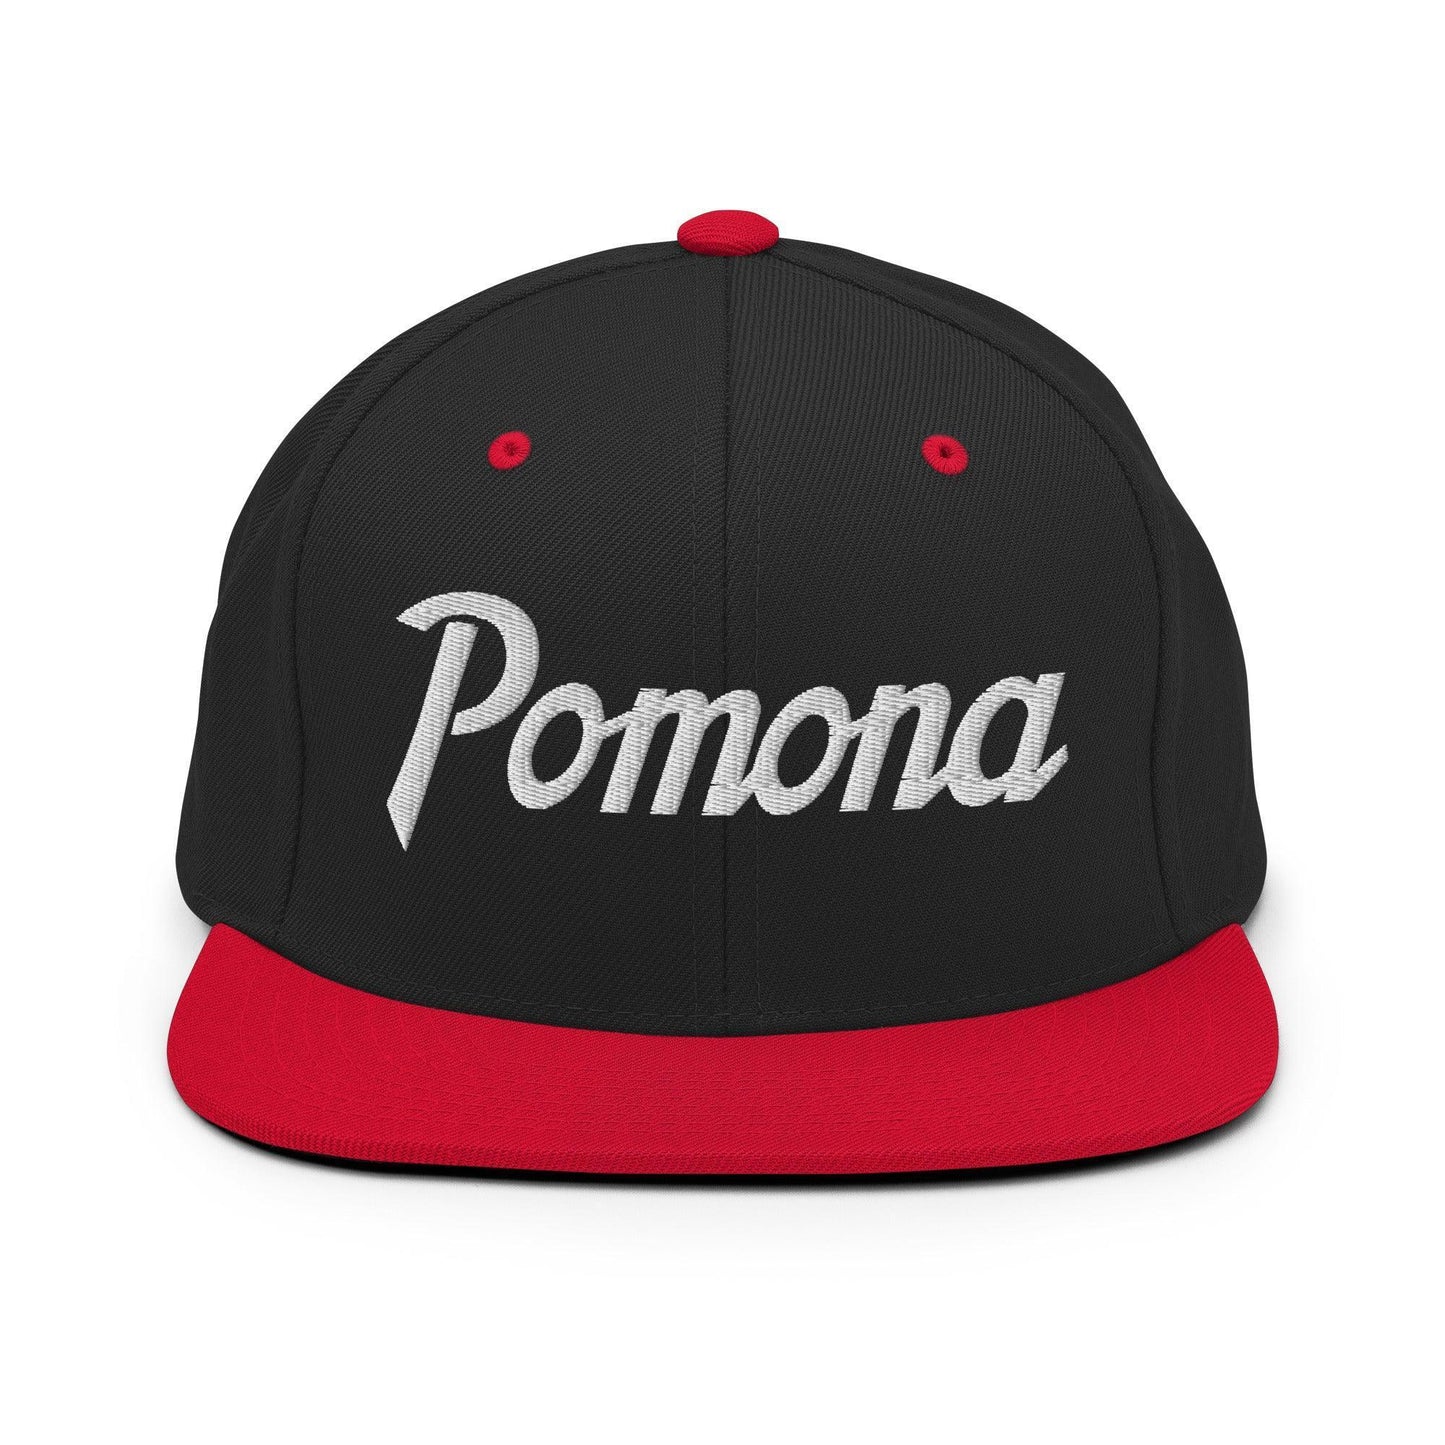 Pomona Snapback Hat Black Red